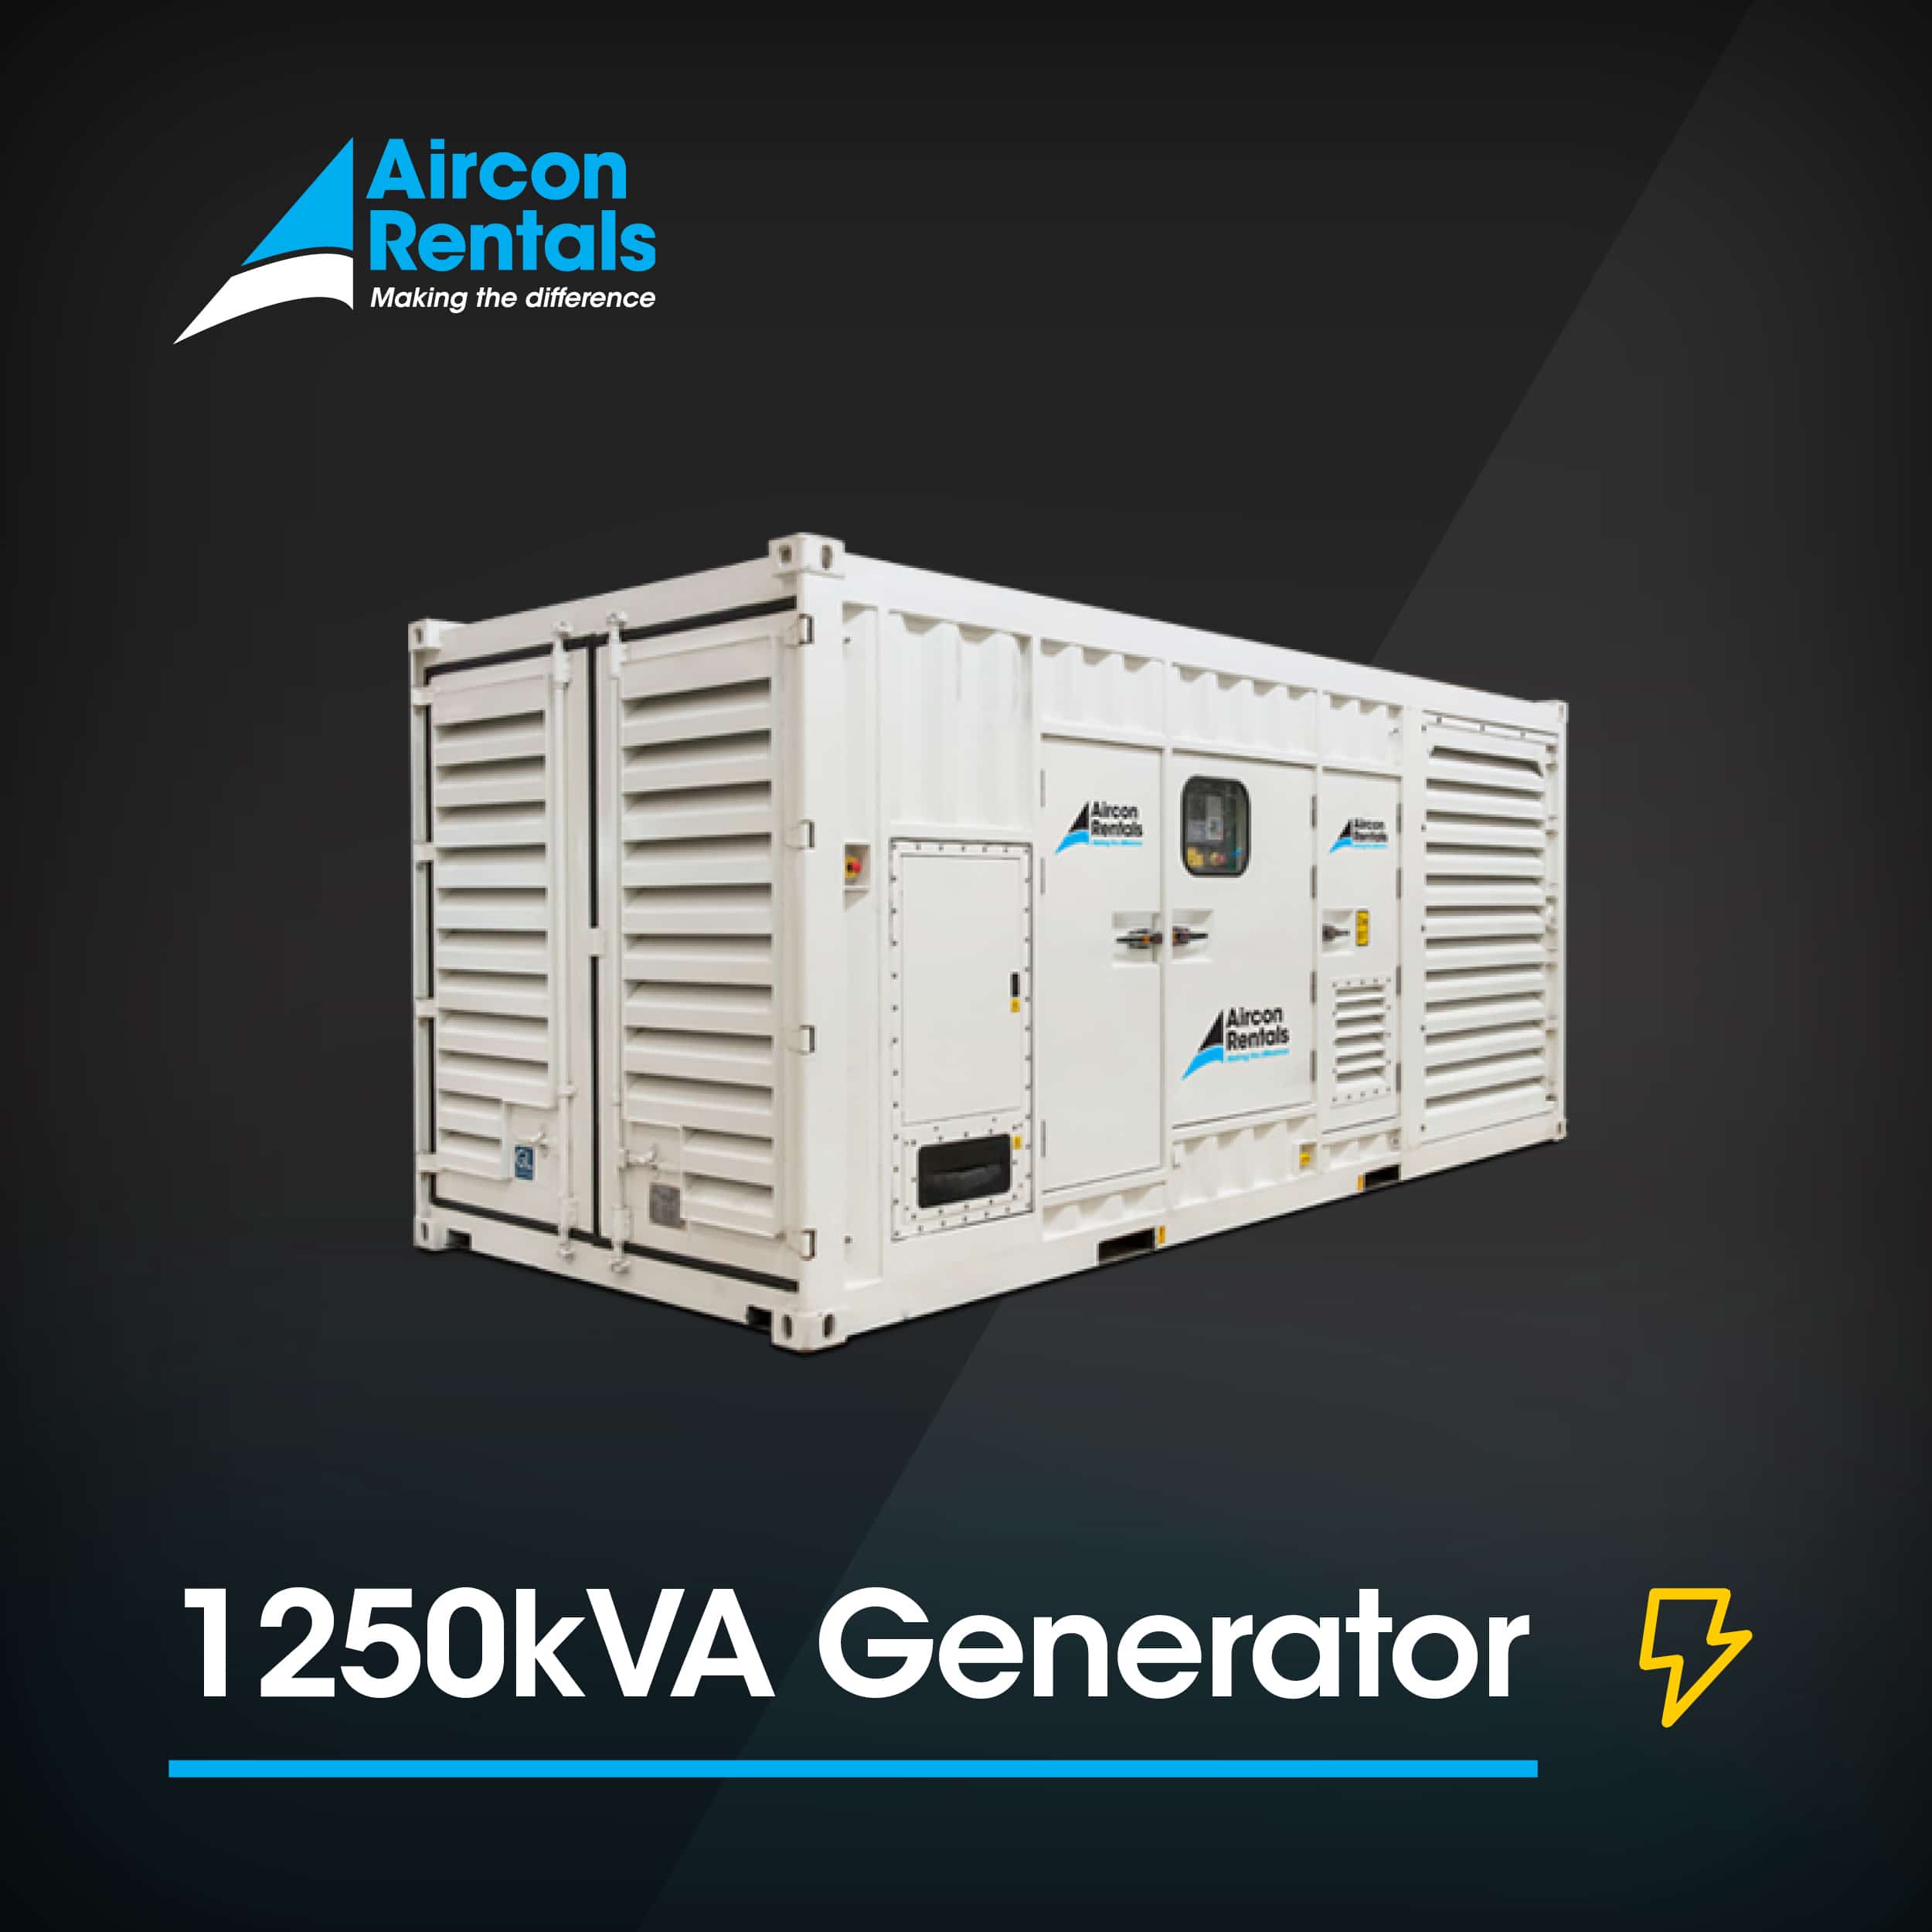 Genset Rental | Air Conditioner Rental | Aircon Rentals - 1250kVA Generator Hire